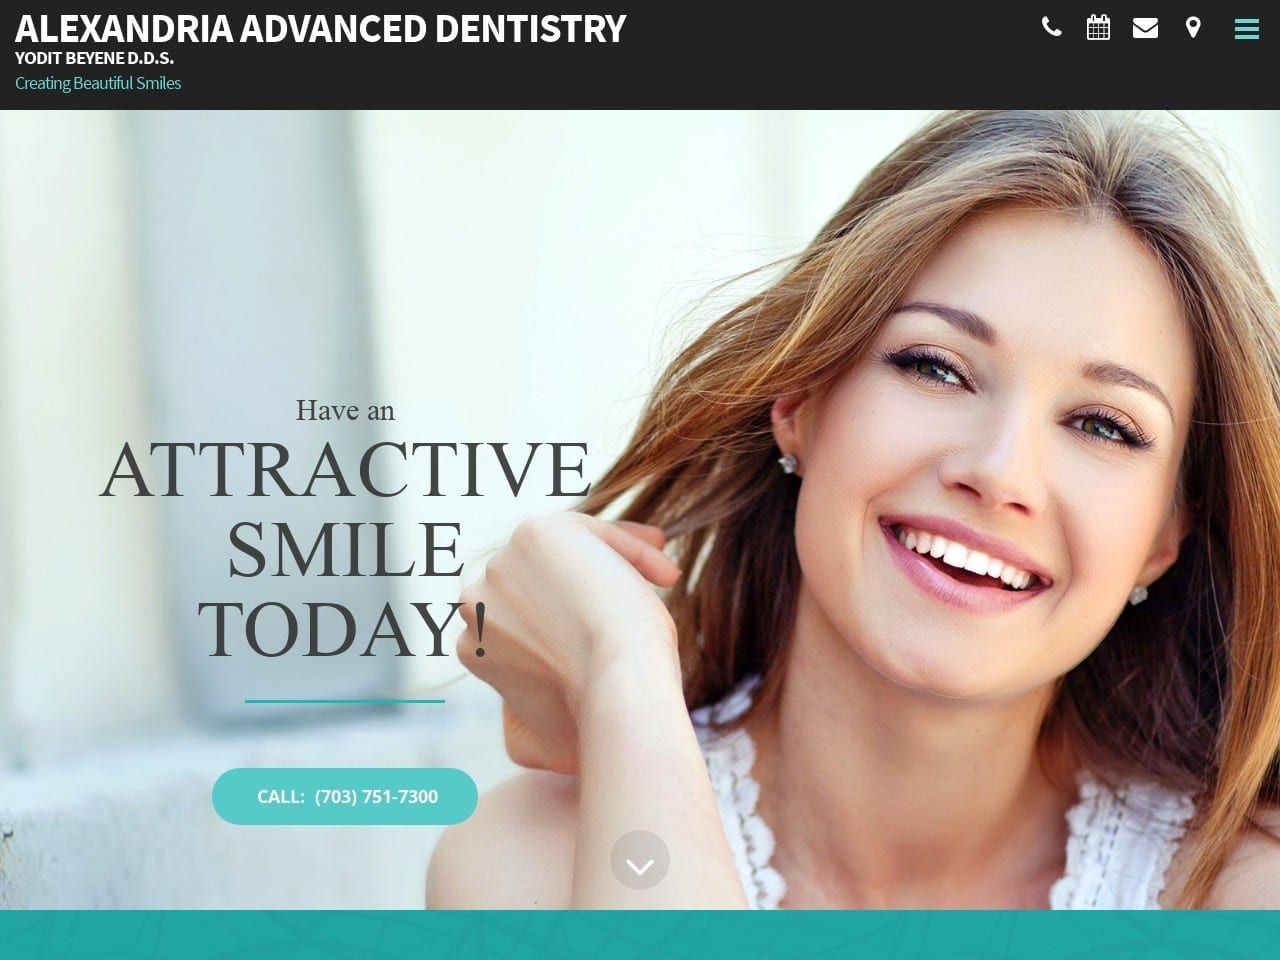 Alexandriaadvanced Dentistry Website Screenshot from alexandriaadvanceddentistry.com